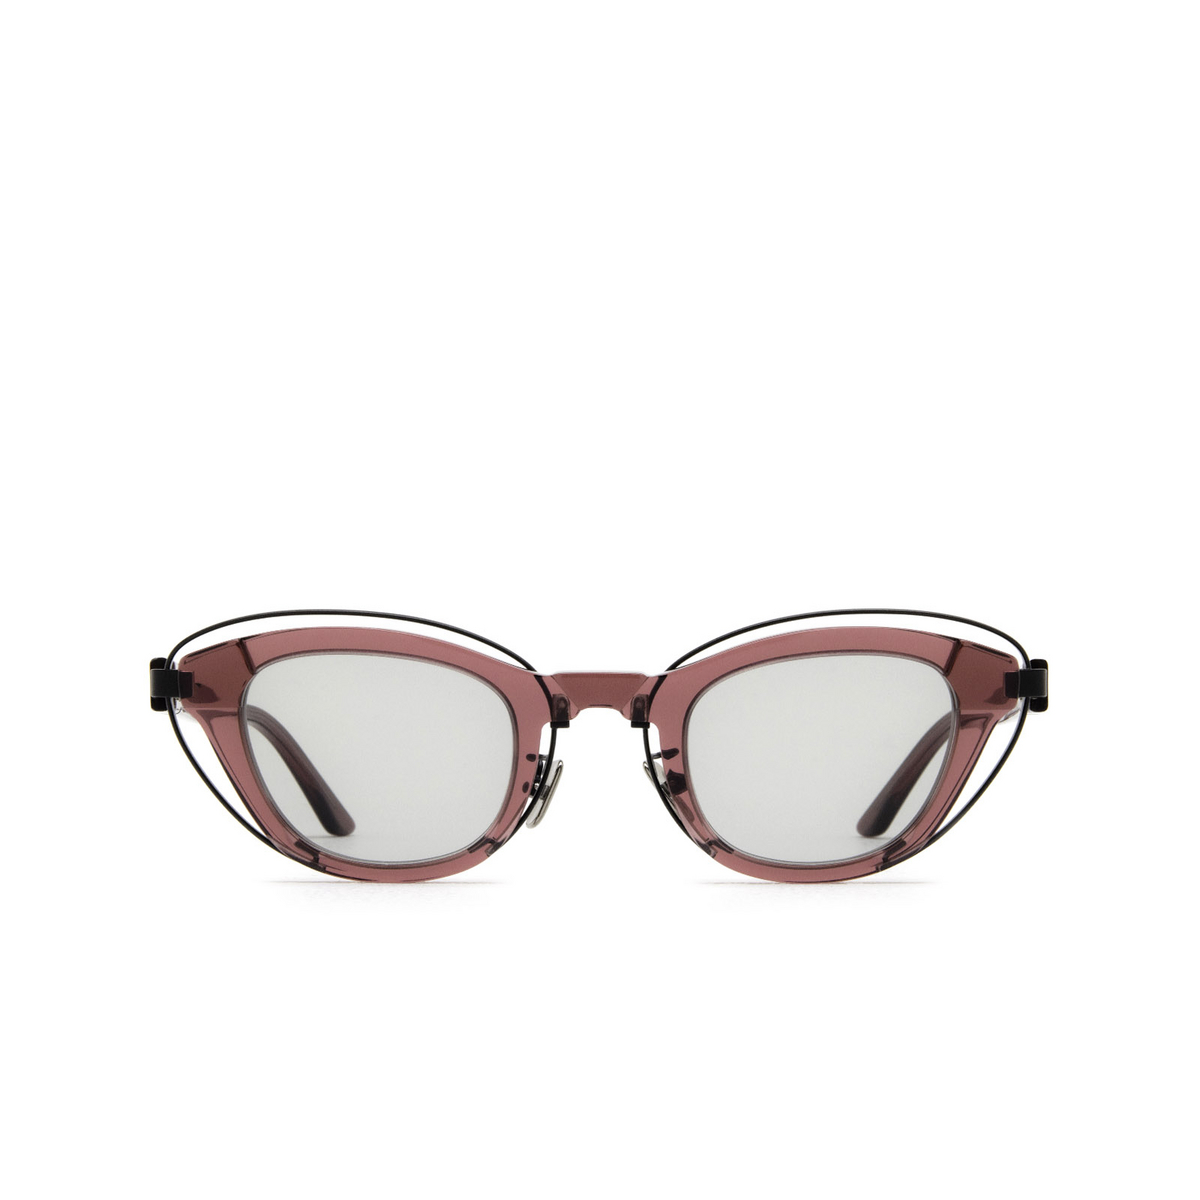 Kuboraum® Cat-eye Sunglasses: N11 color Cherry Che - front view.